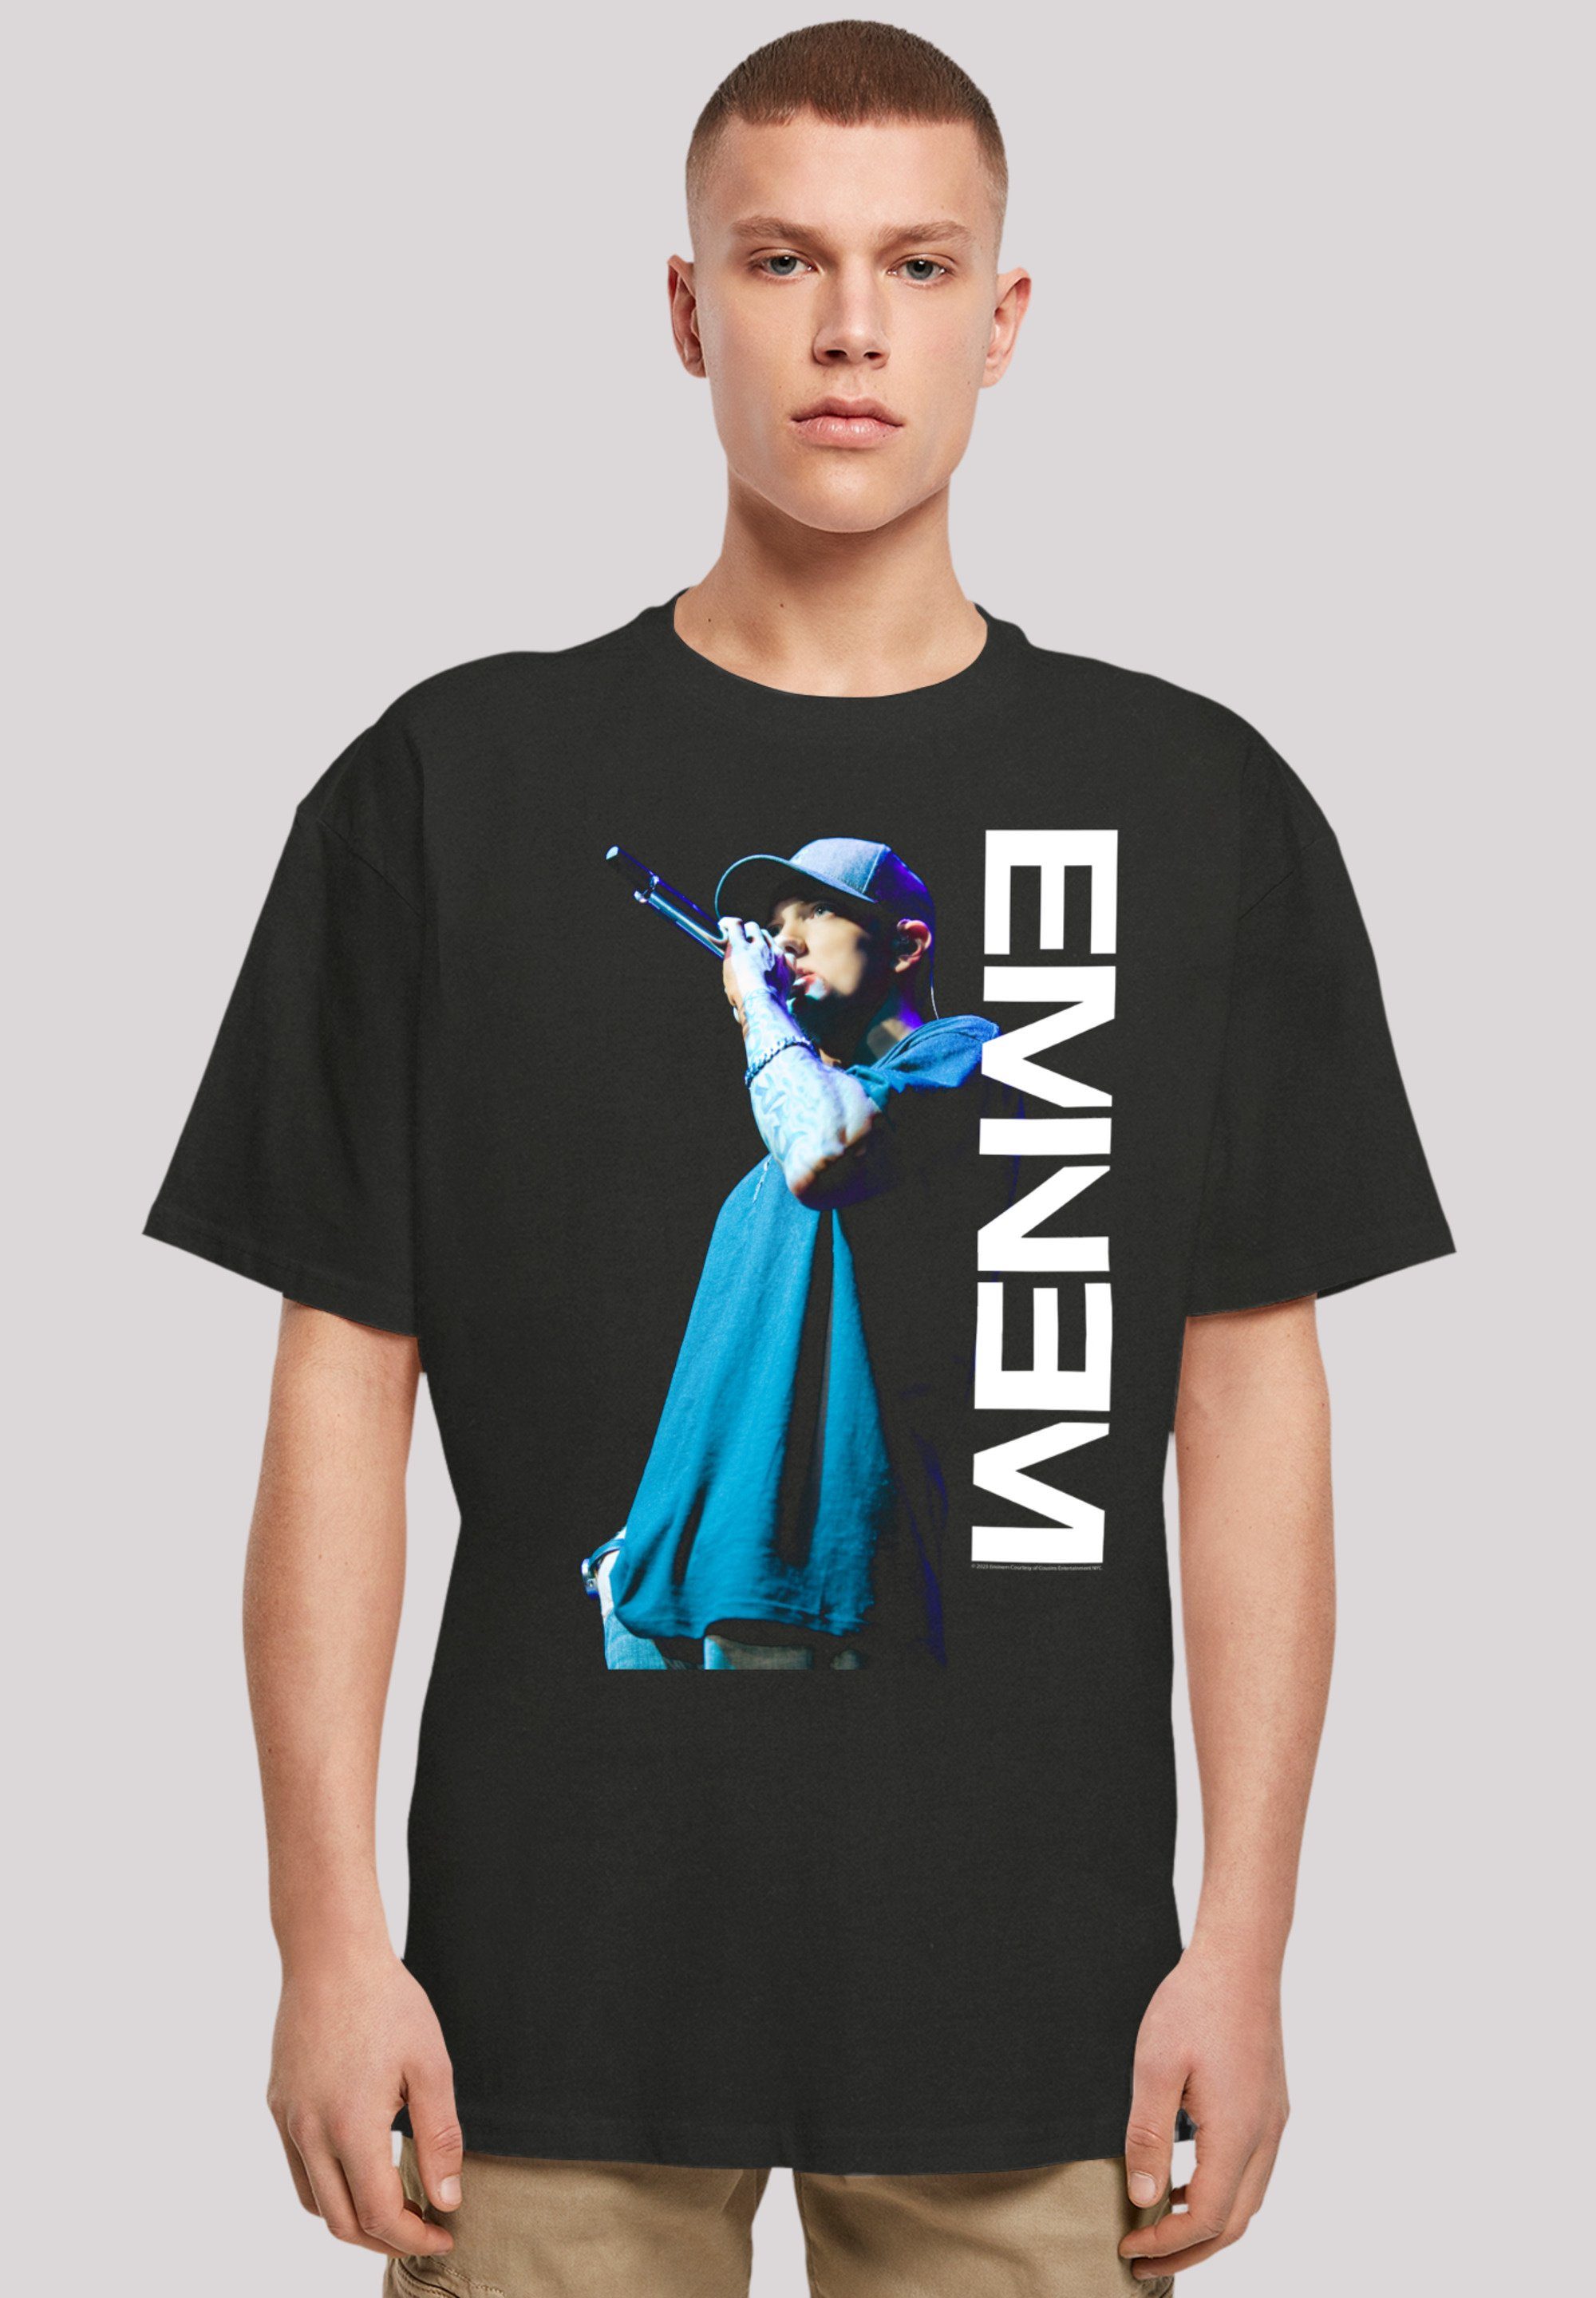 F4NT4STIC T-Shirt Eminem Mic Pose Hip Hop Rap Music Premium Qualität, Musik schwarz